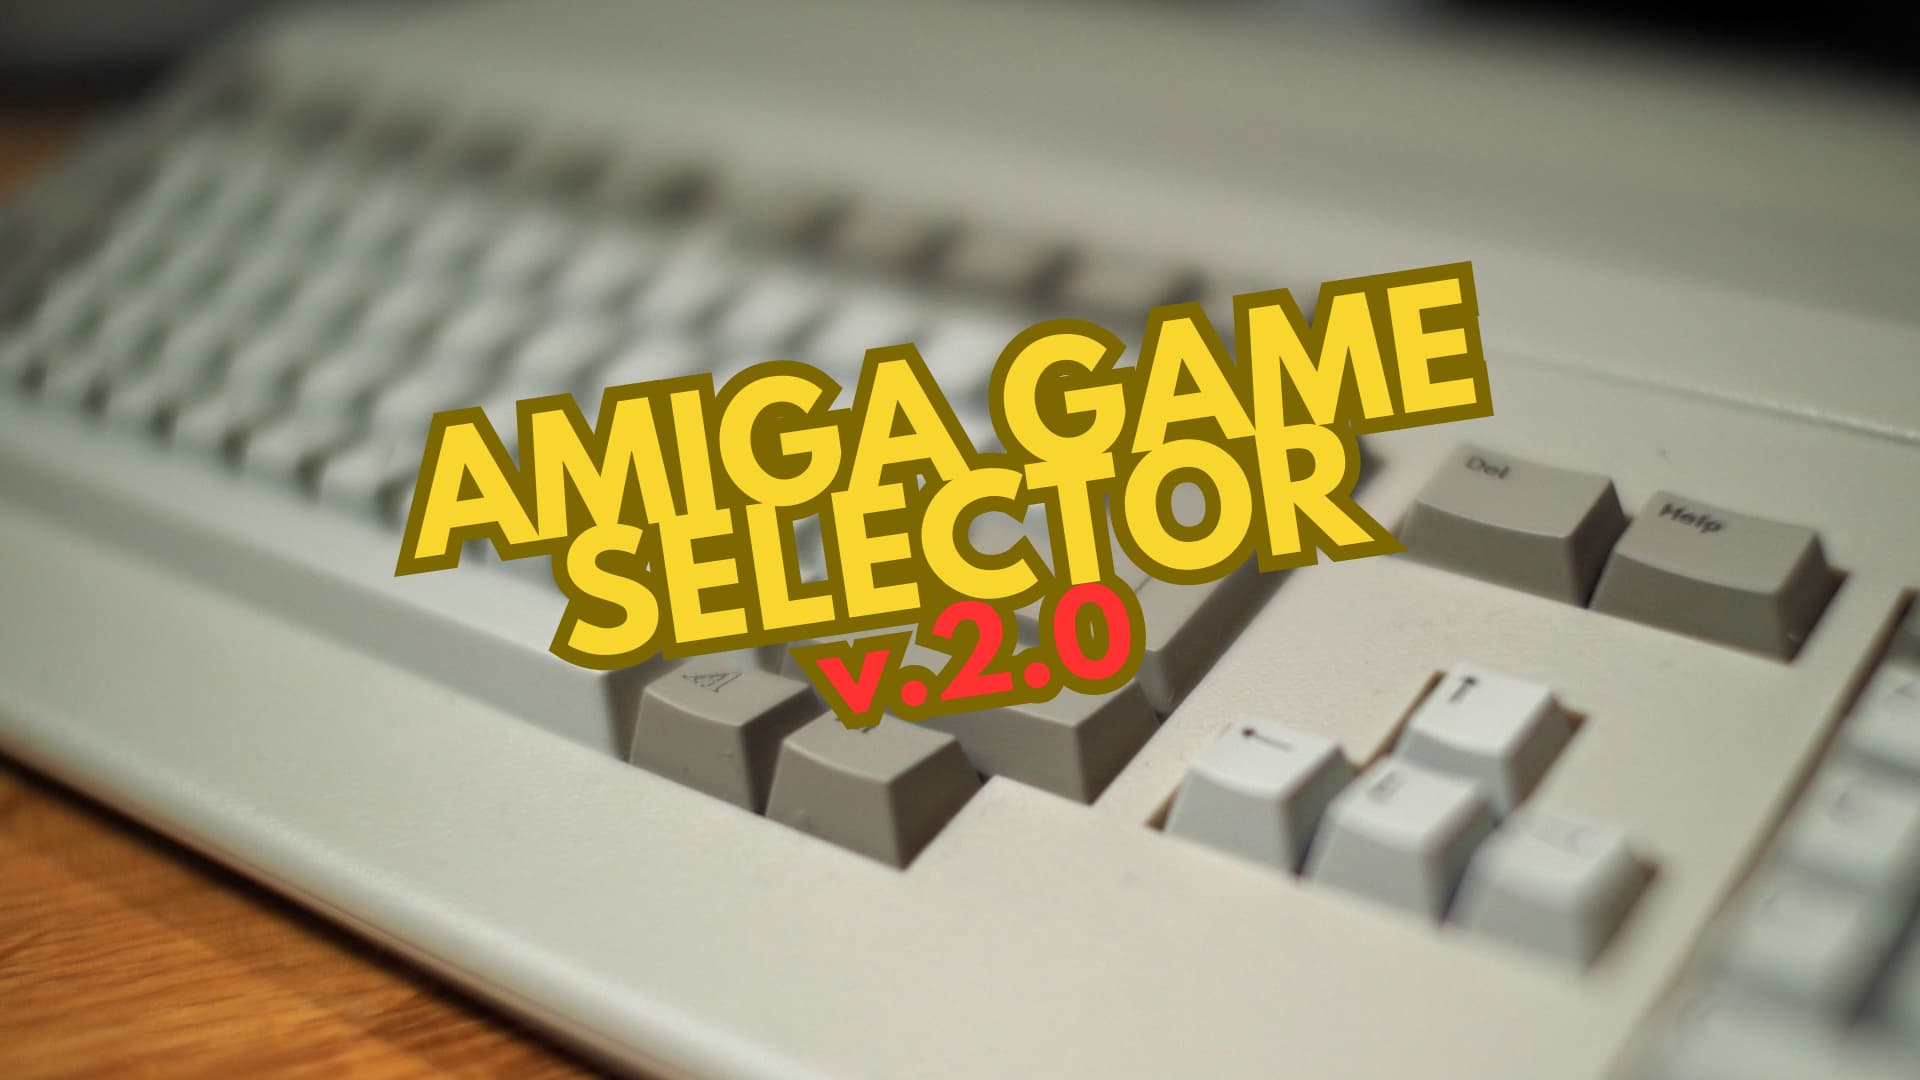 Der A500 Mini Game Selector v2.0 | Das Mega Game Pack für deinen A500 Mini Commodore Amiga Nachbau